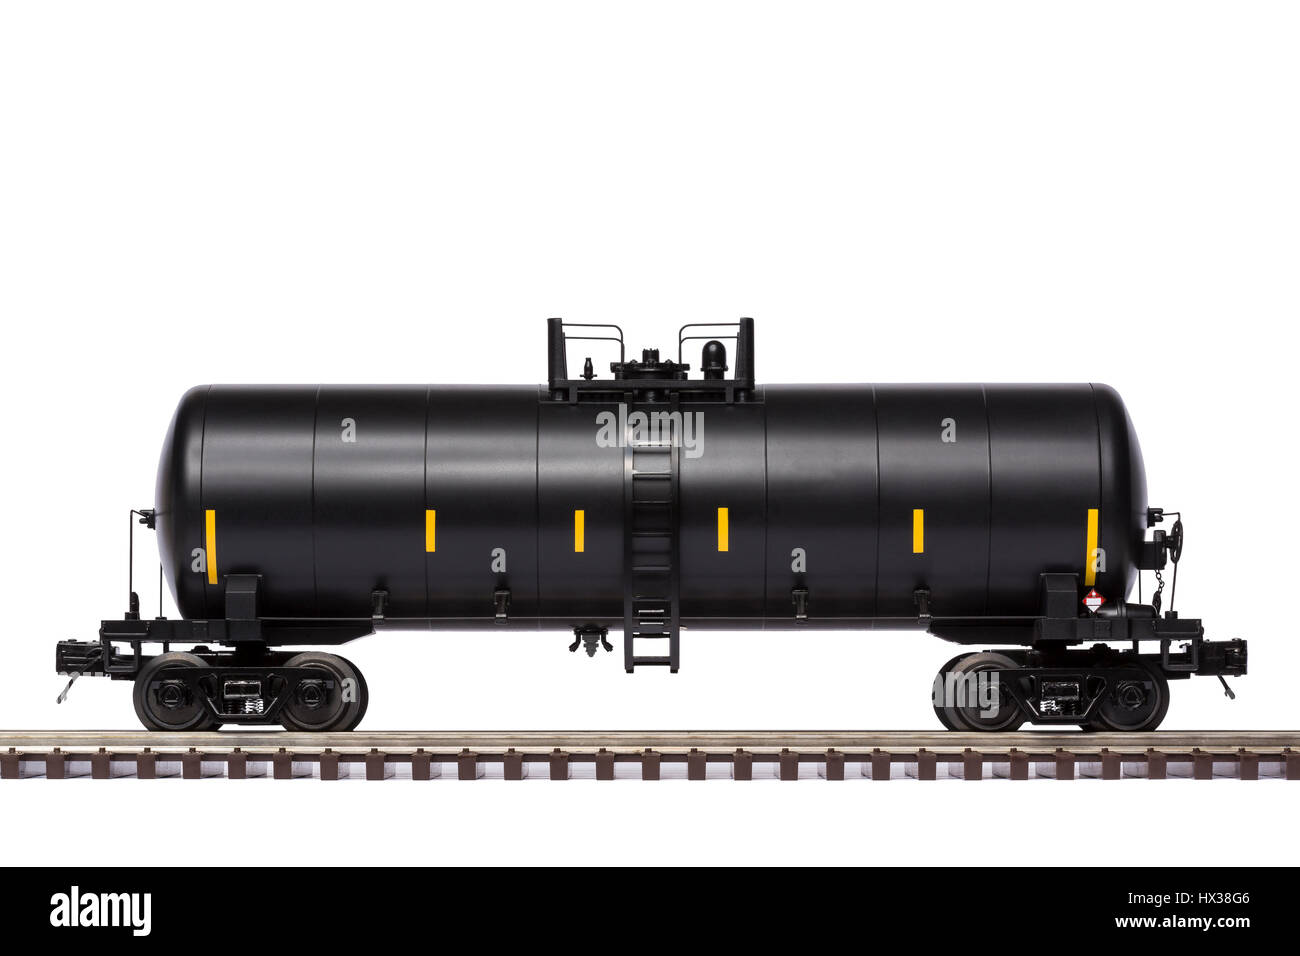 Railroad Tank Car - A black railway oil tank car on railroad track. Stock Photo